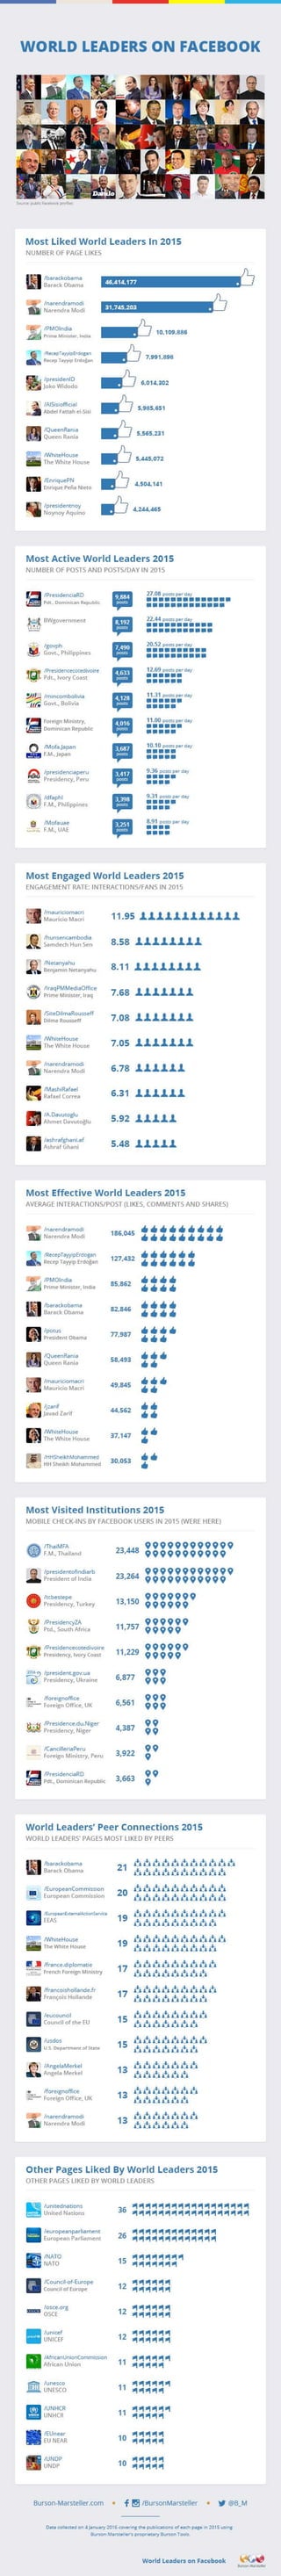 World Leaders on Facebook